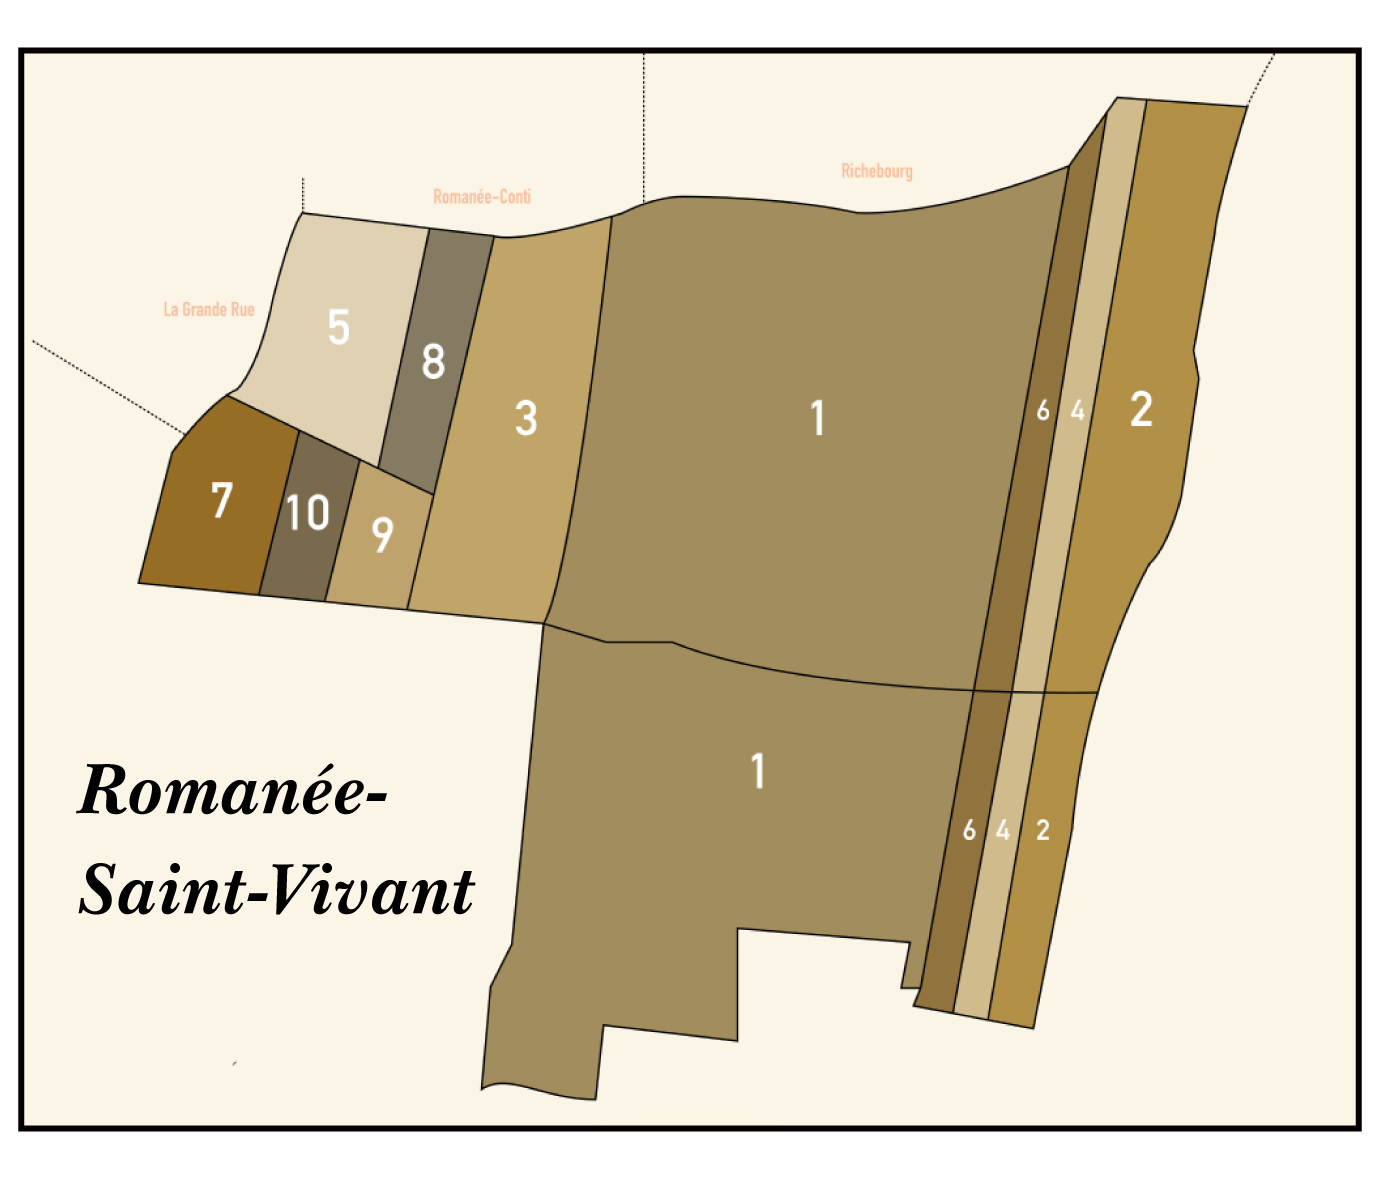 Romanée-Saint-Vivant Grand Cru